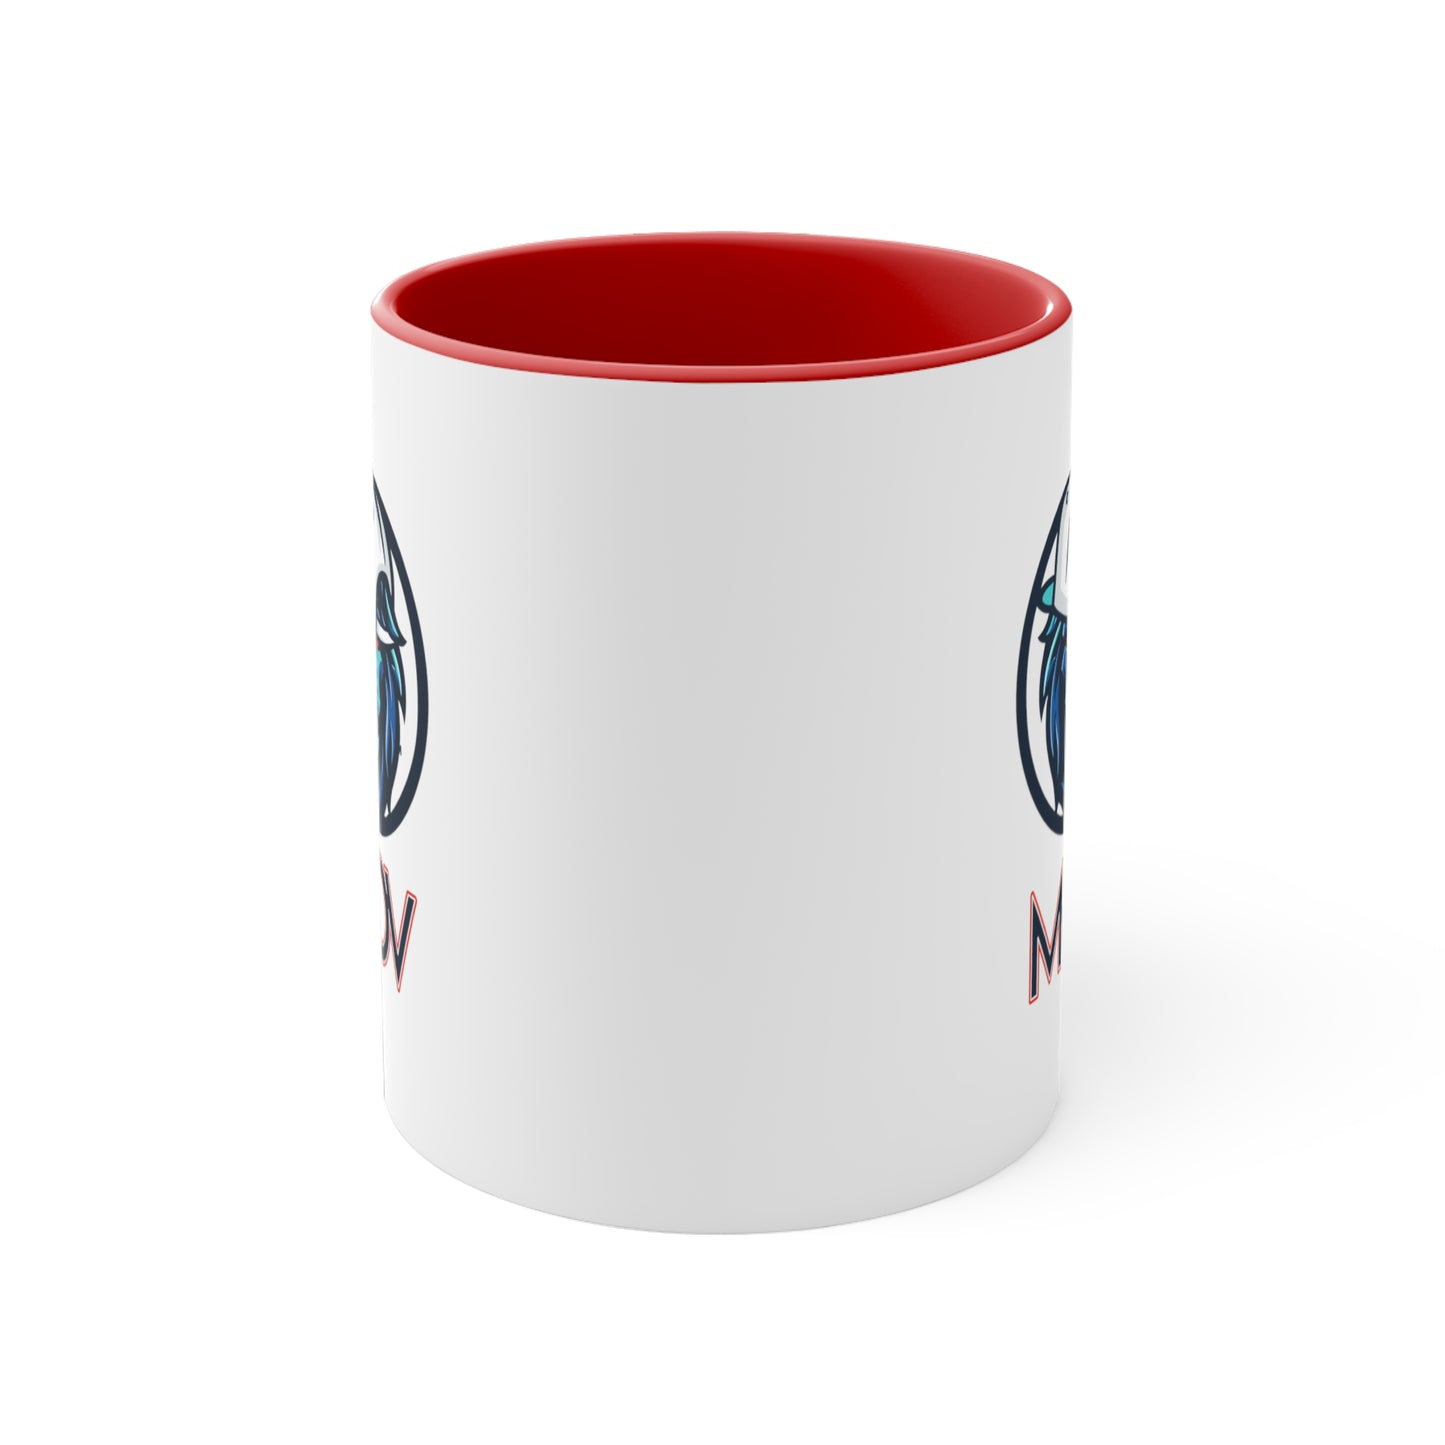 MOV Signature - Accent Coffee Mug, 11oz